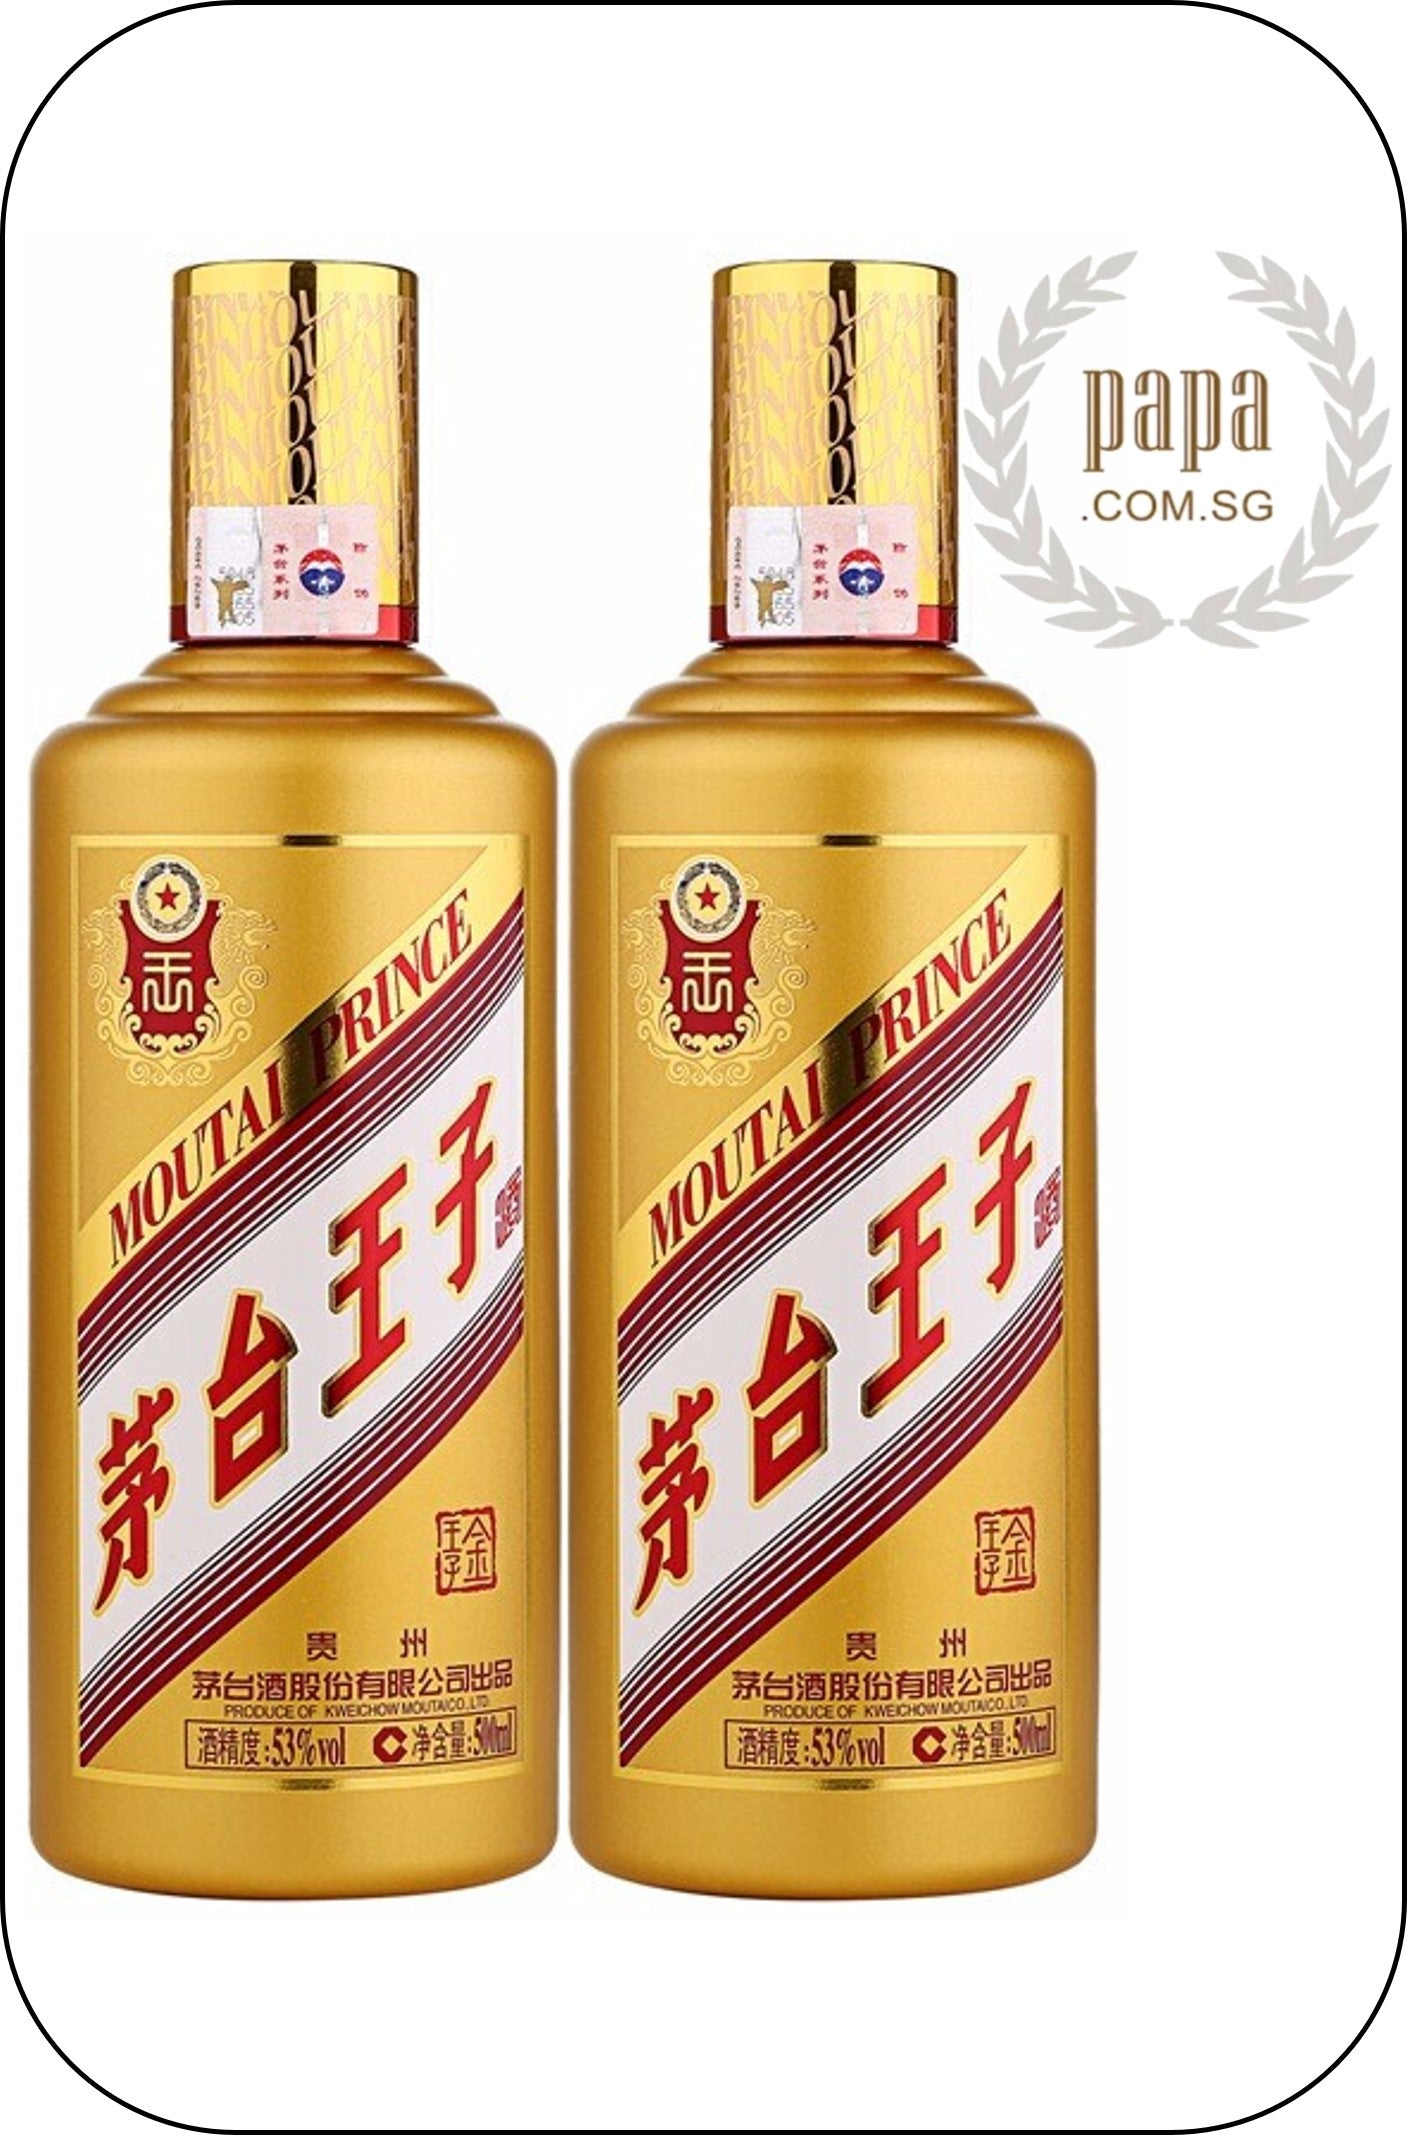 **NEW!! KweiChow Moutai GOLD Prince - 53% abv 贵州茅台金王子酒